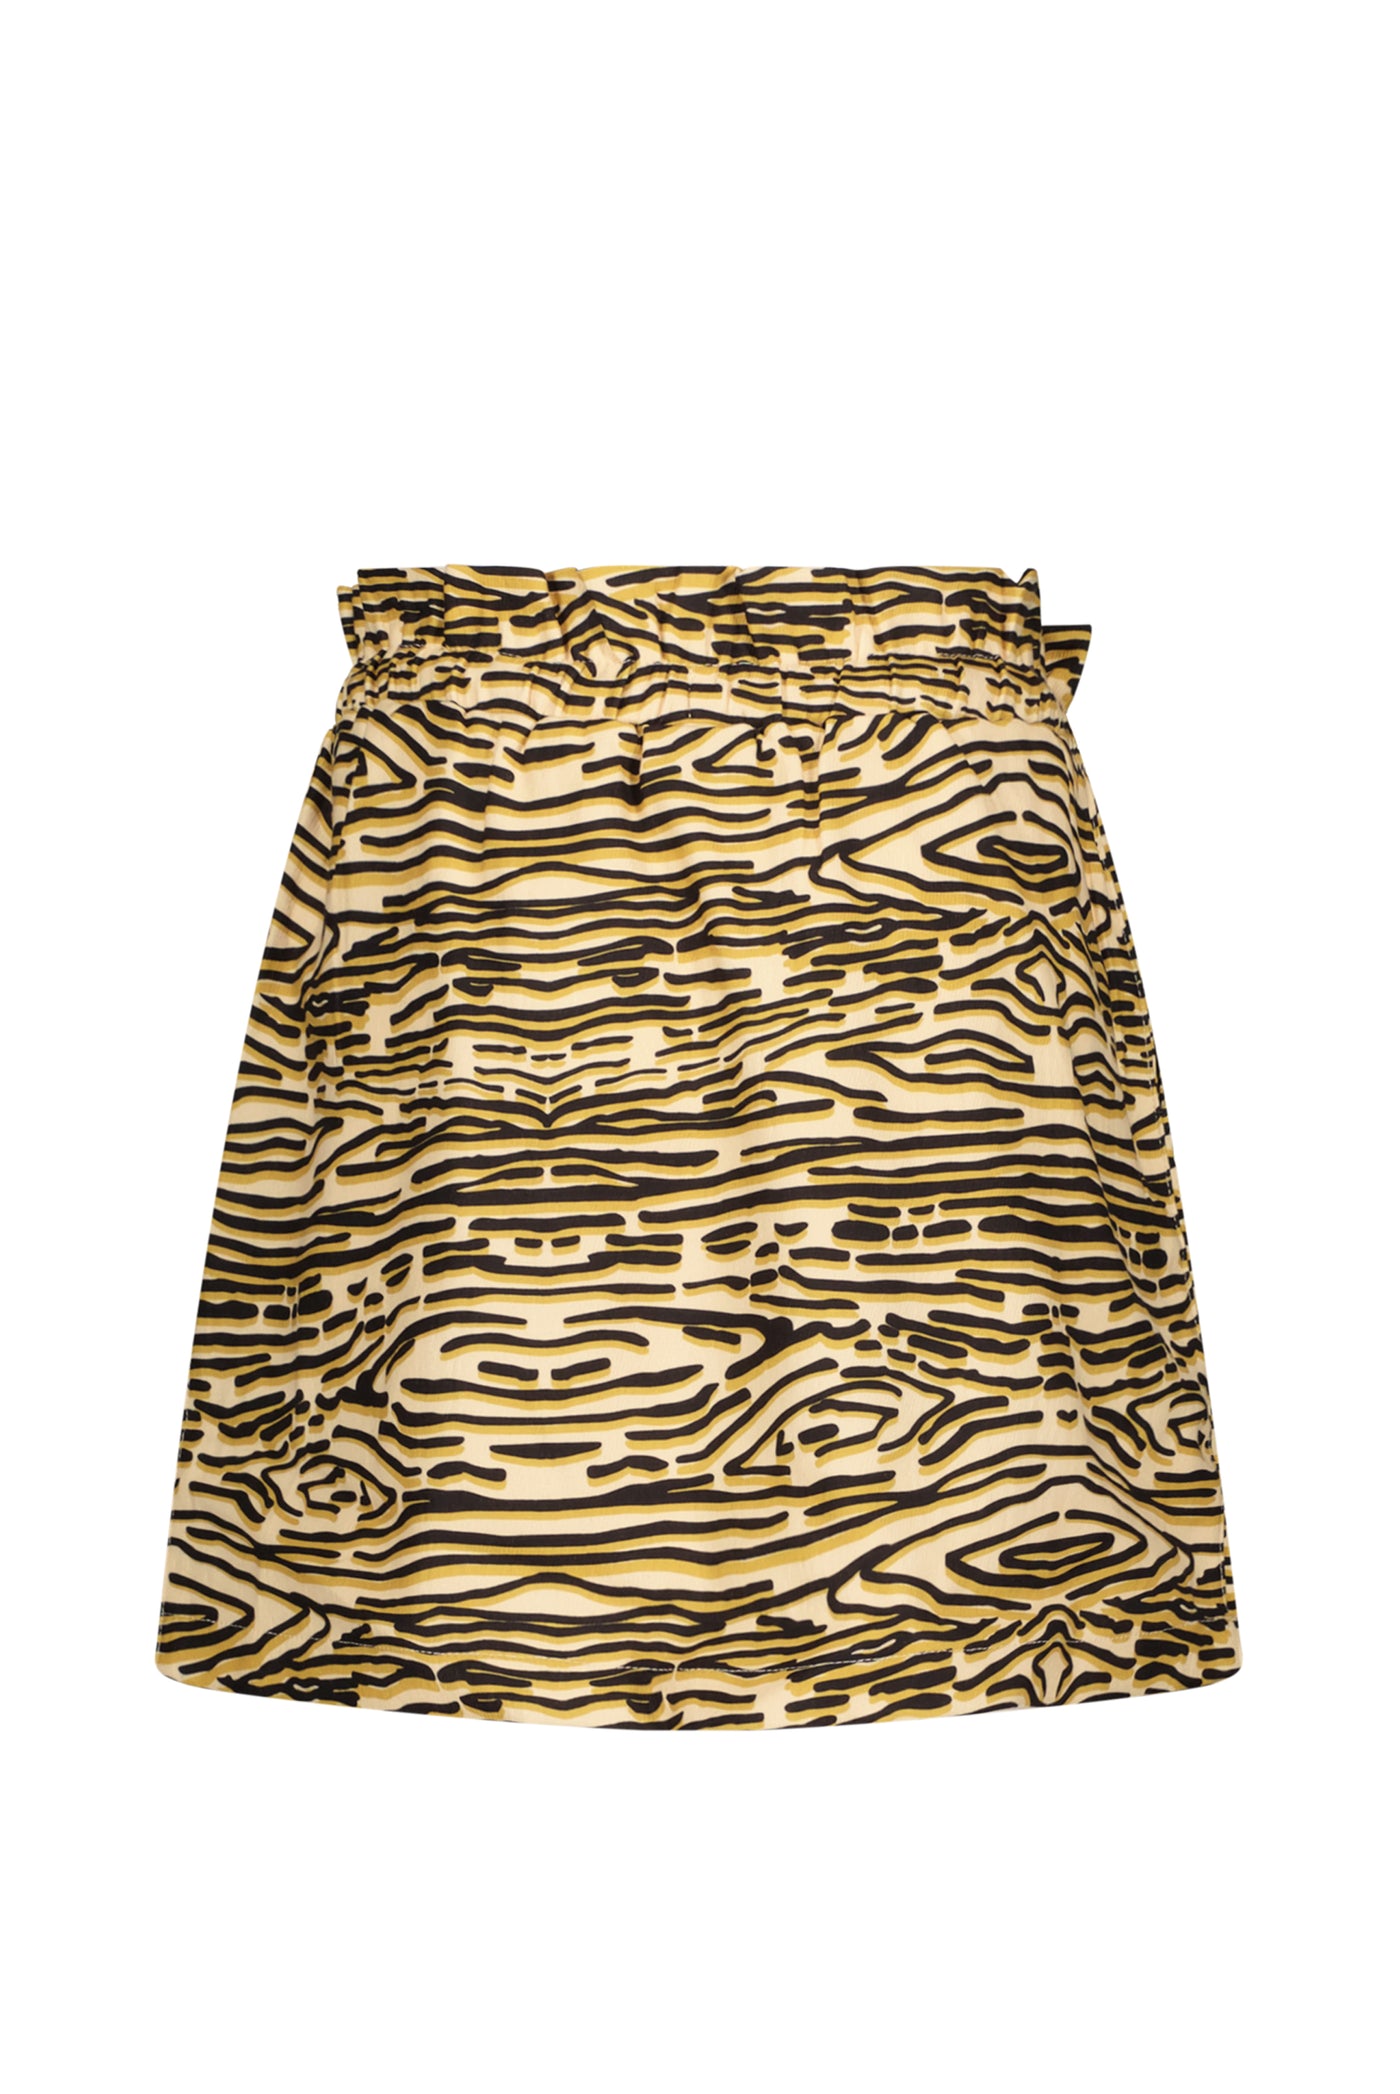 Flo girls AOP wood skirt Wood F208-5795 935